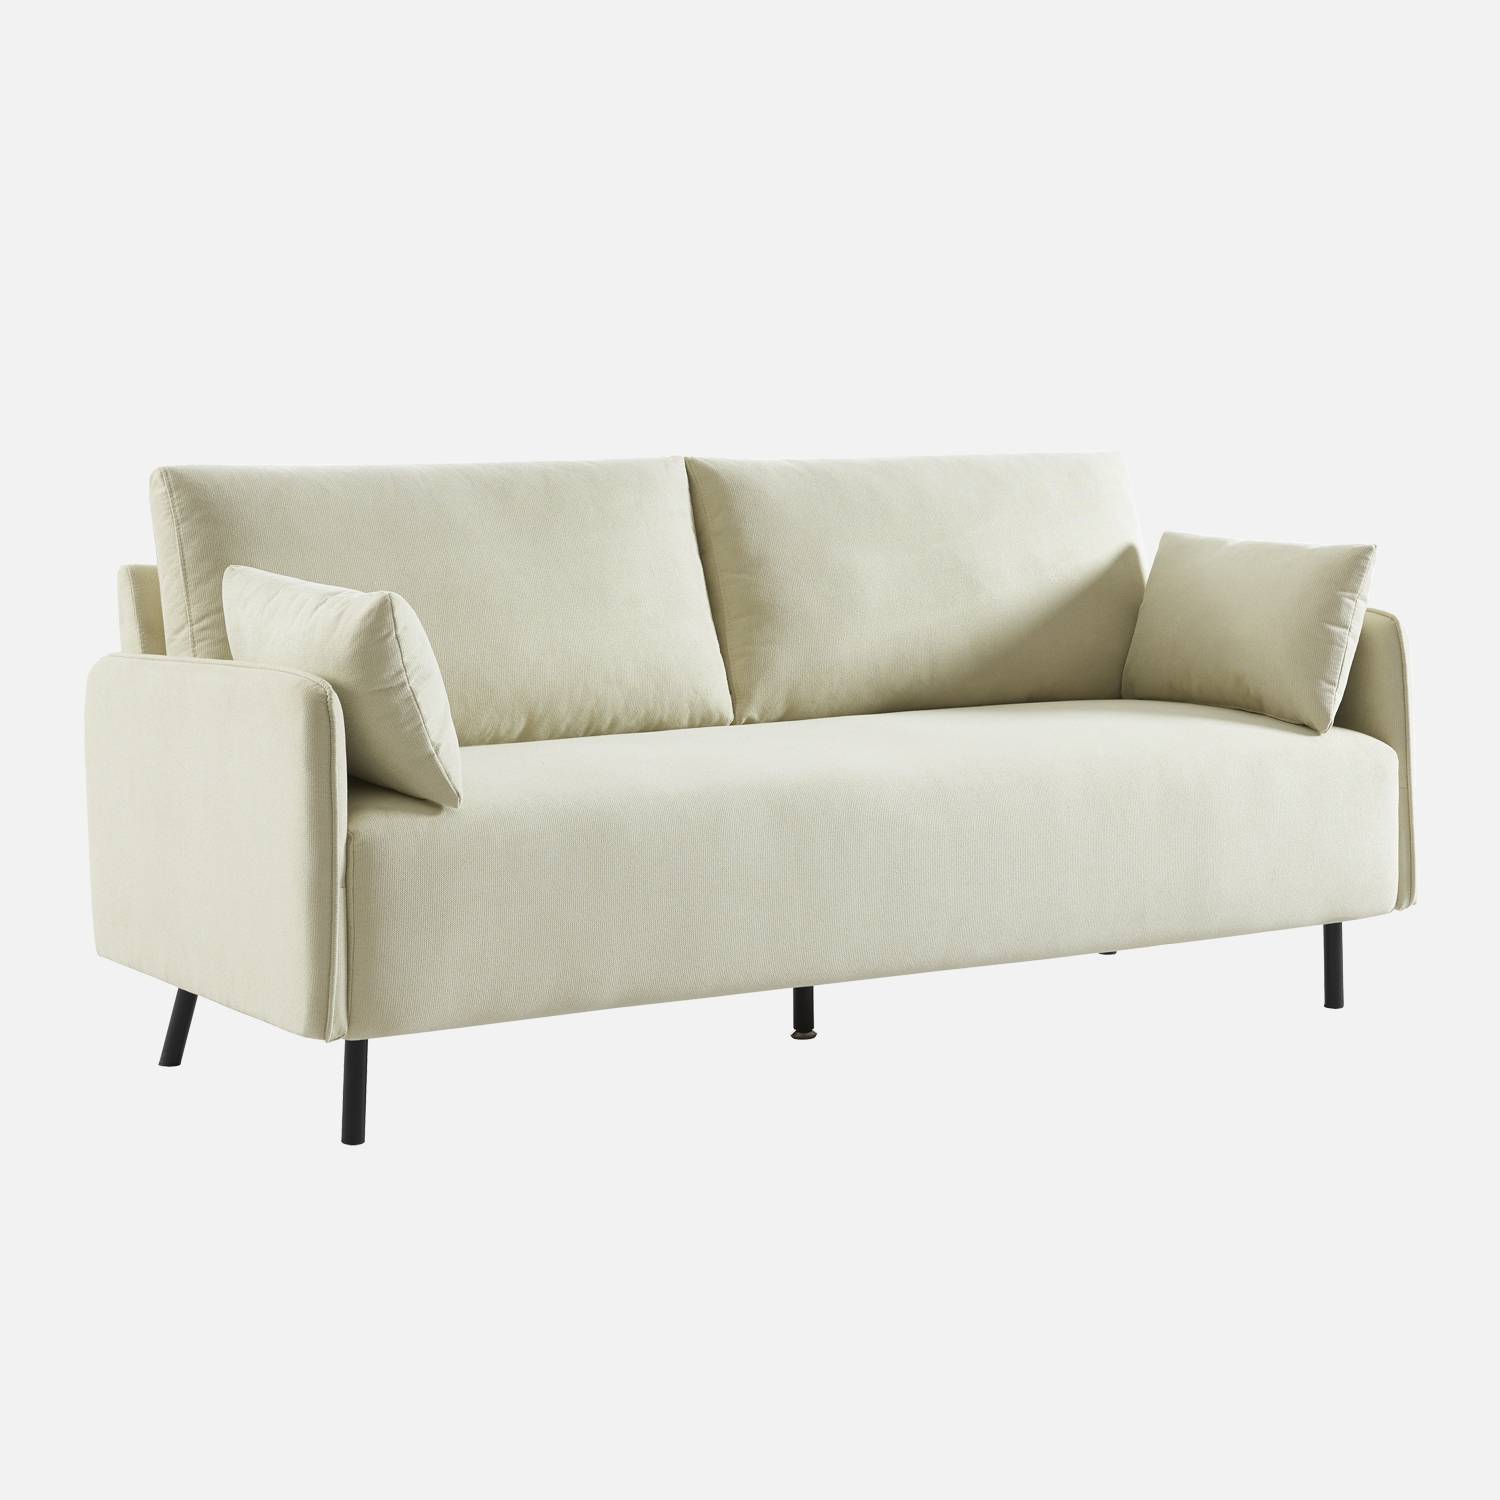  3-Sitzer-Sofa mit cremefarbenem wasserabweisendem Bezug I sweeek